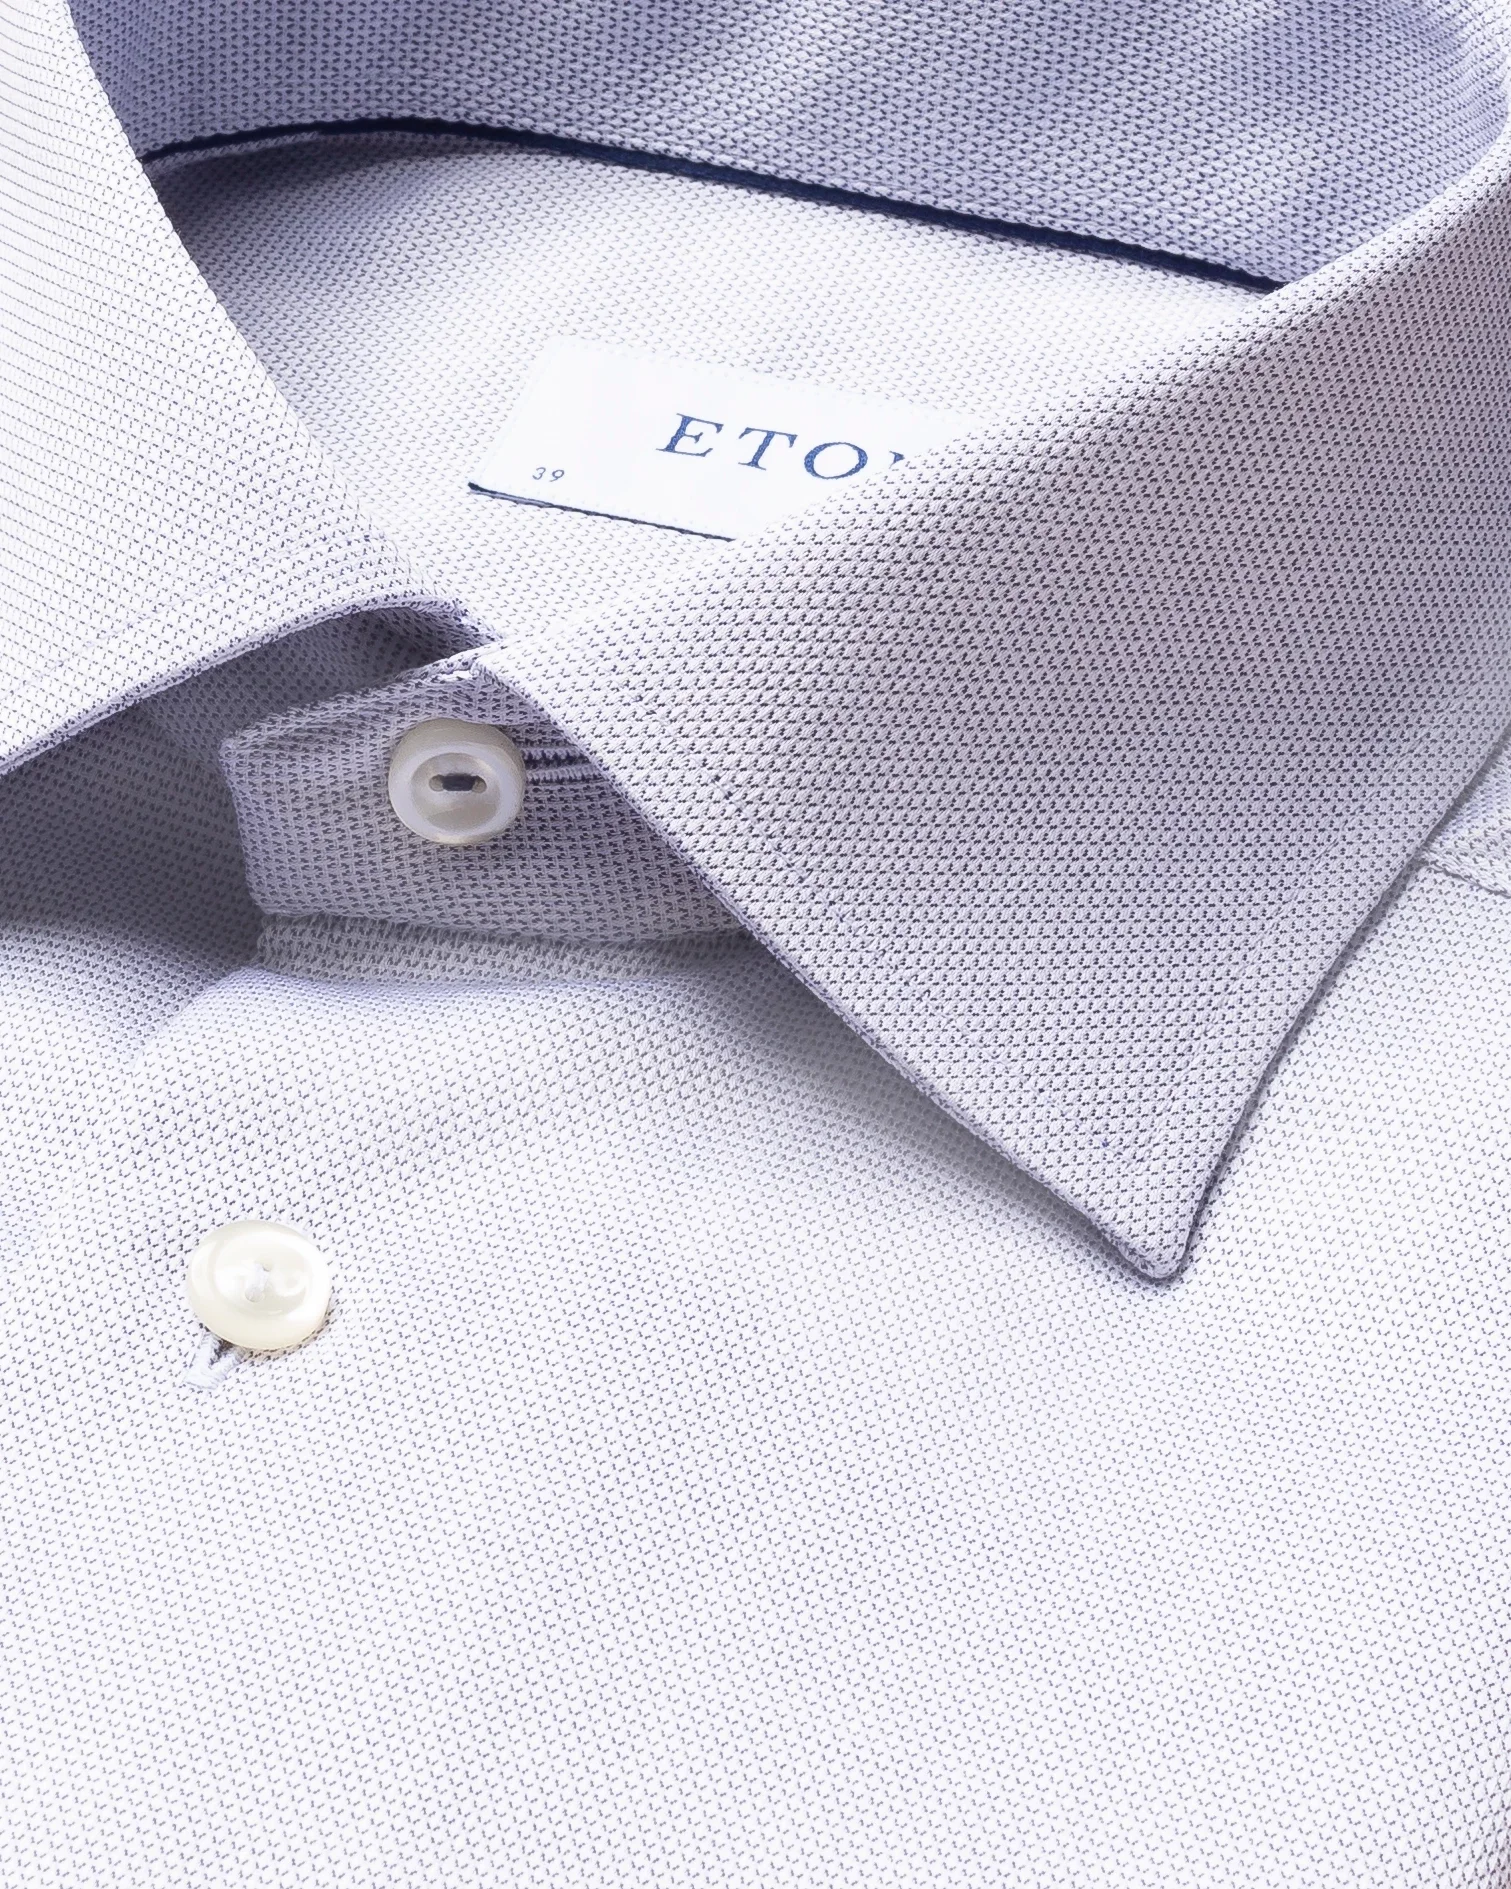 Eton - navy diamond weave shirt